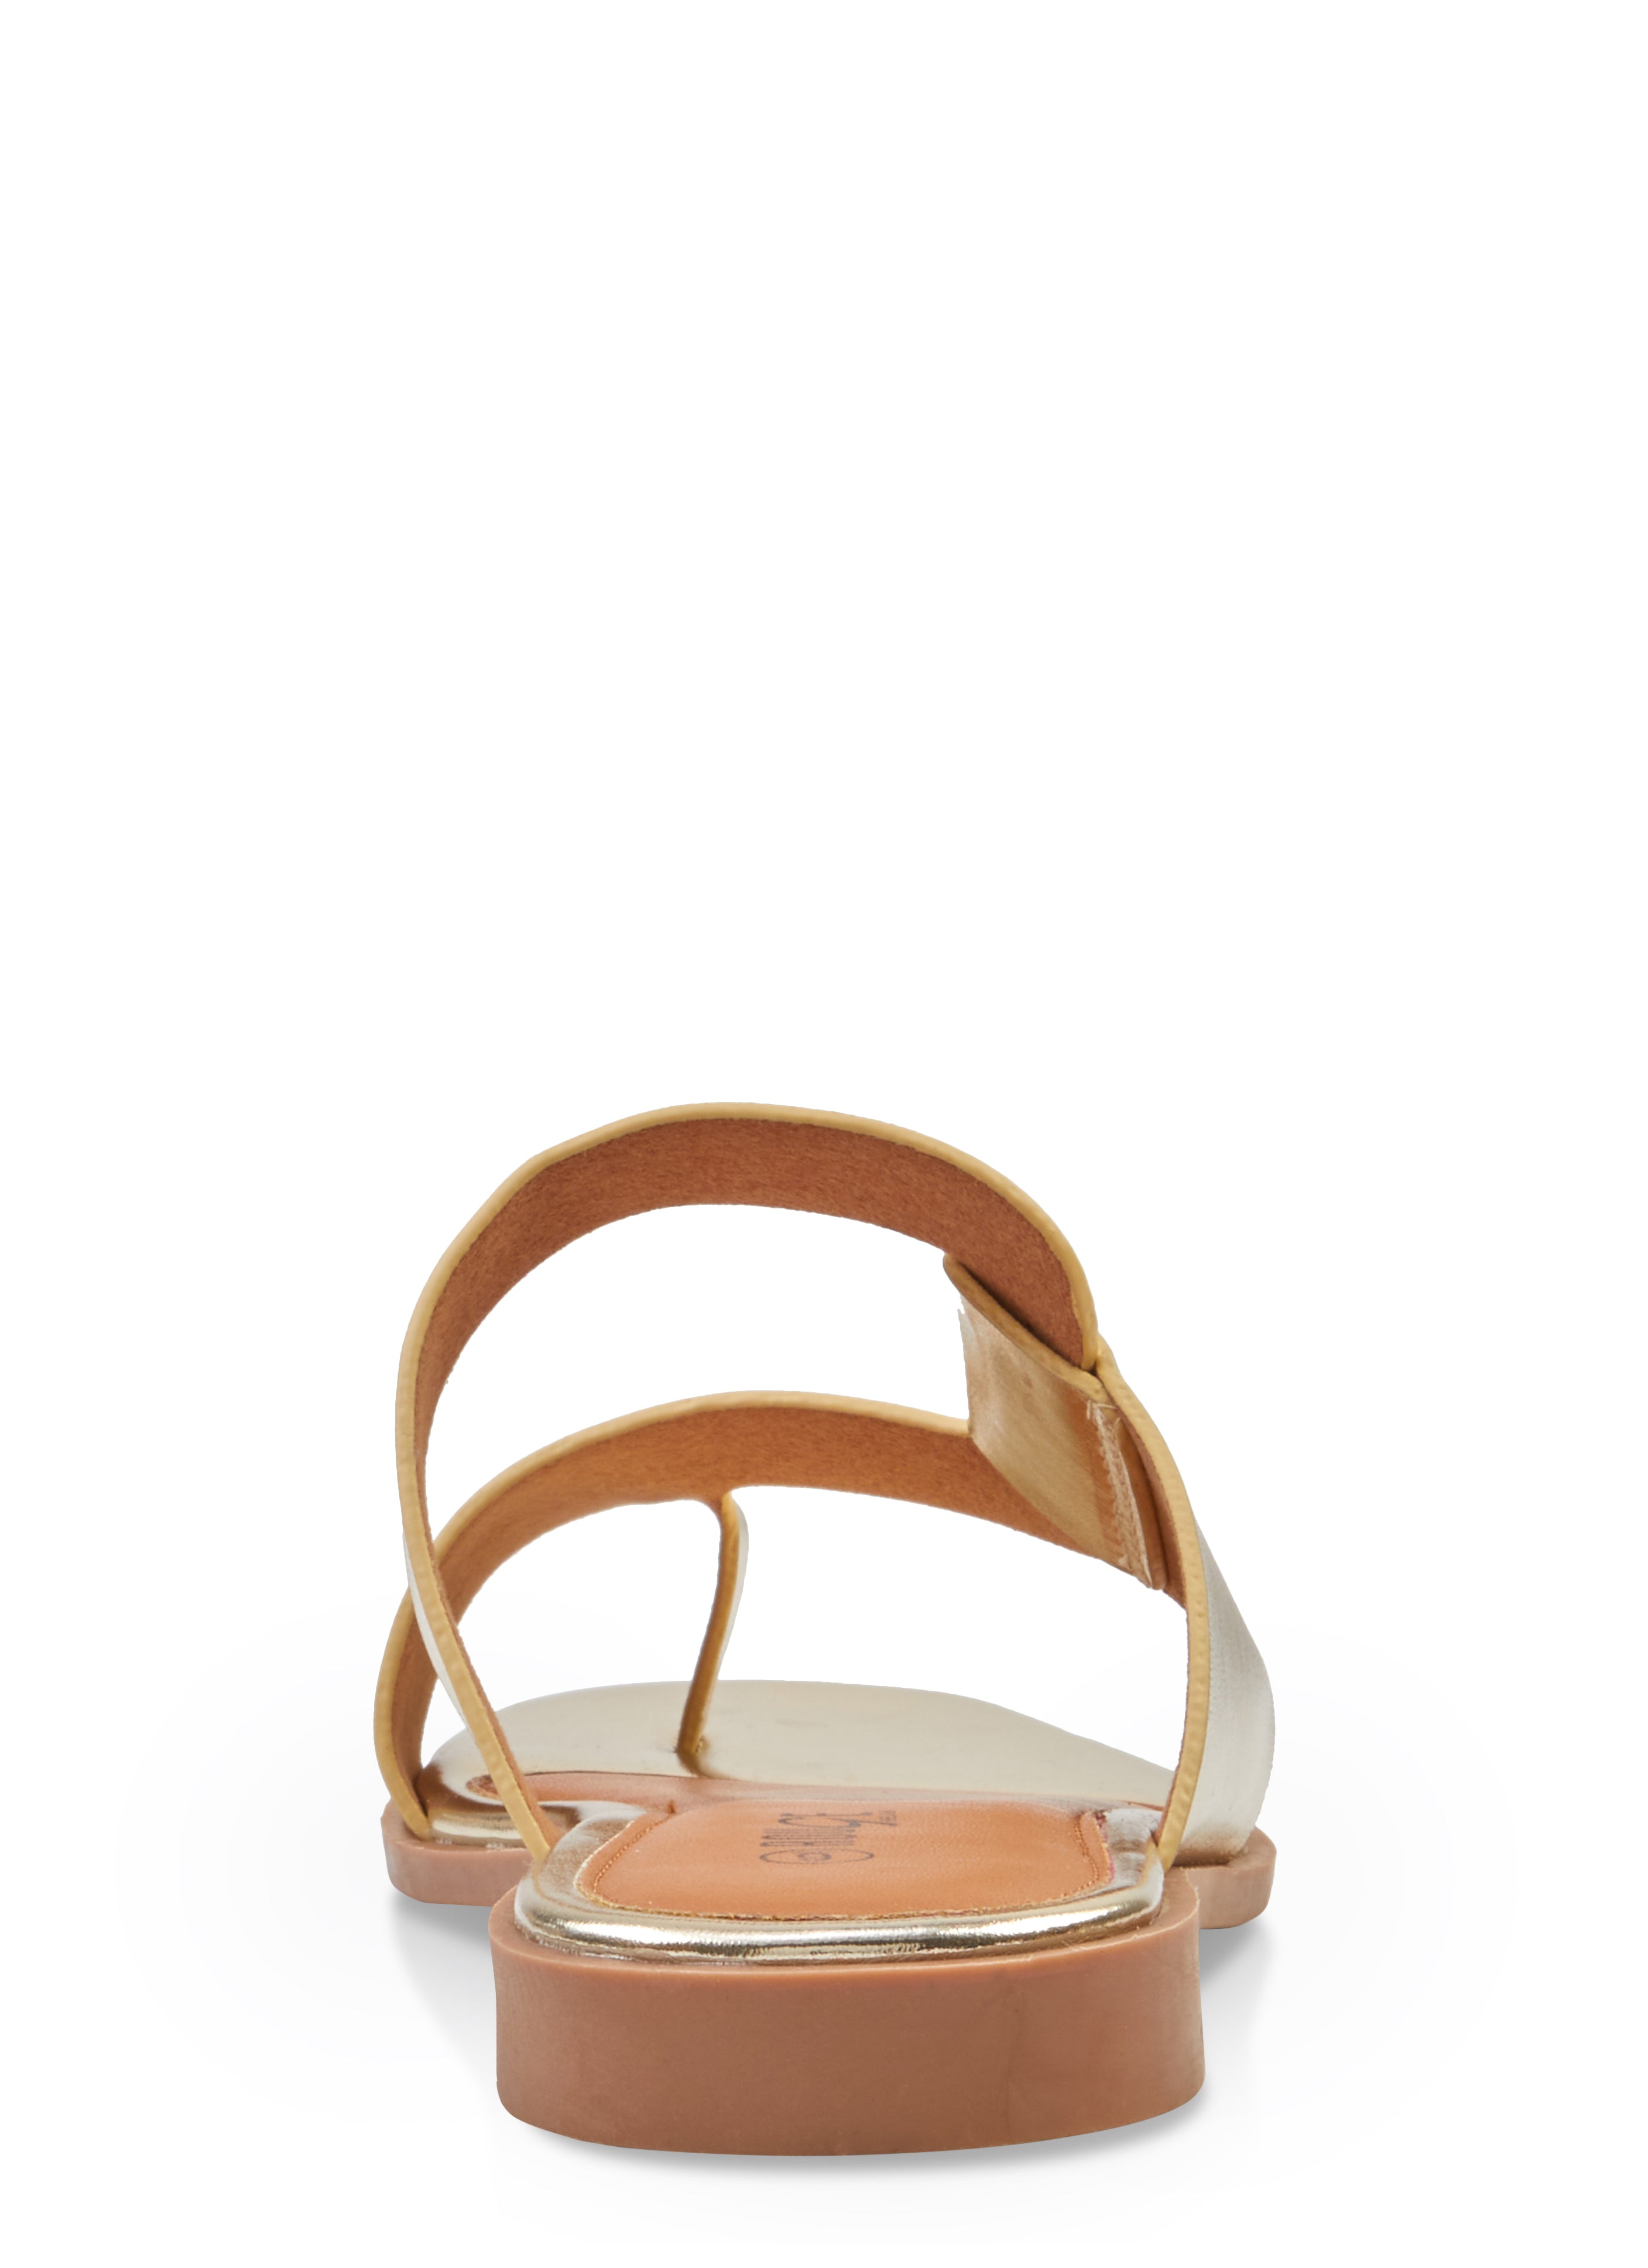 Asymmetrical Toe Loop Band Slide Sandals